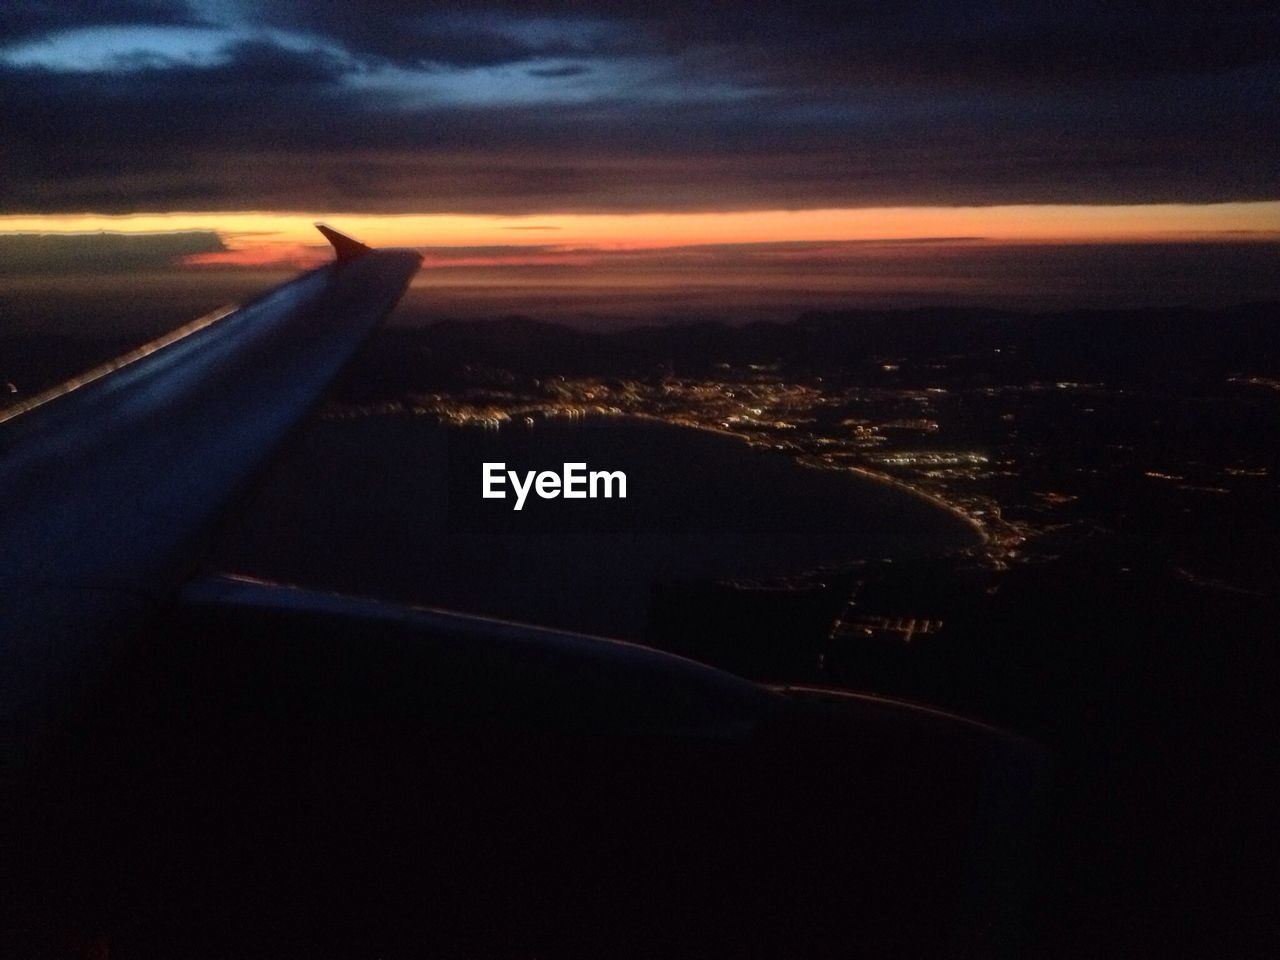 Cropped image of airplane flying over illuminated cityscape